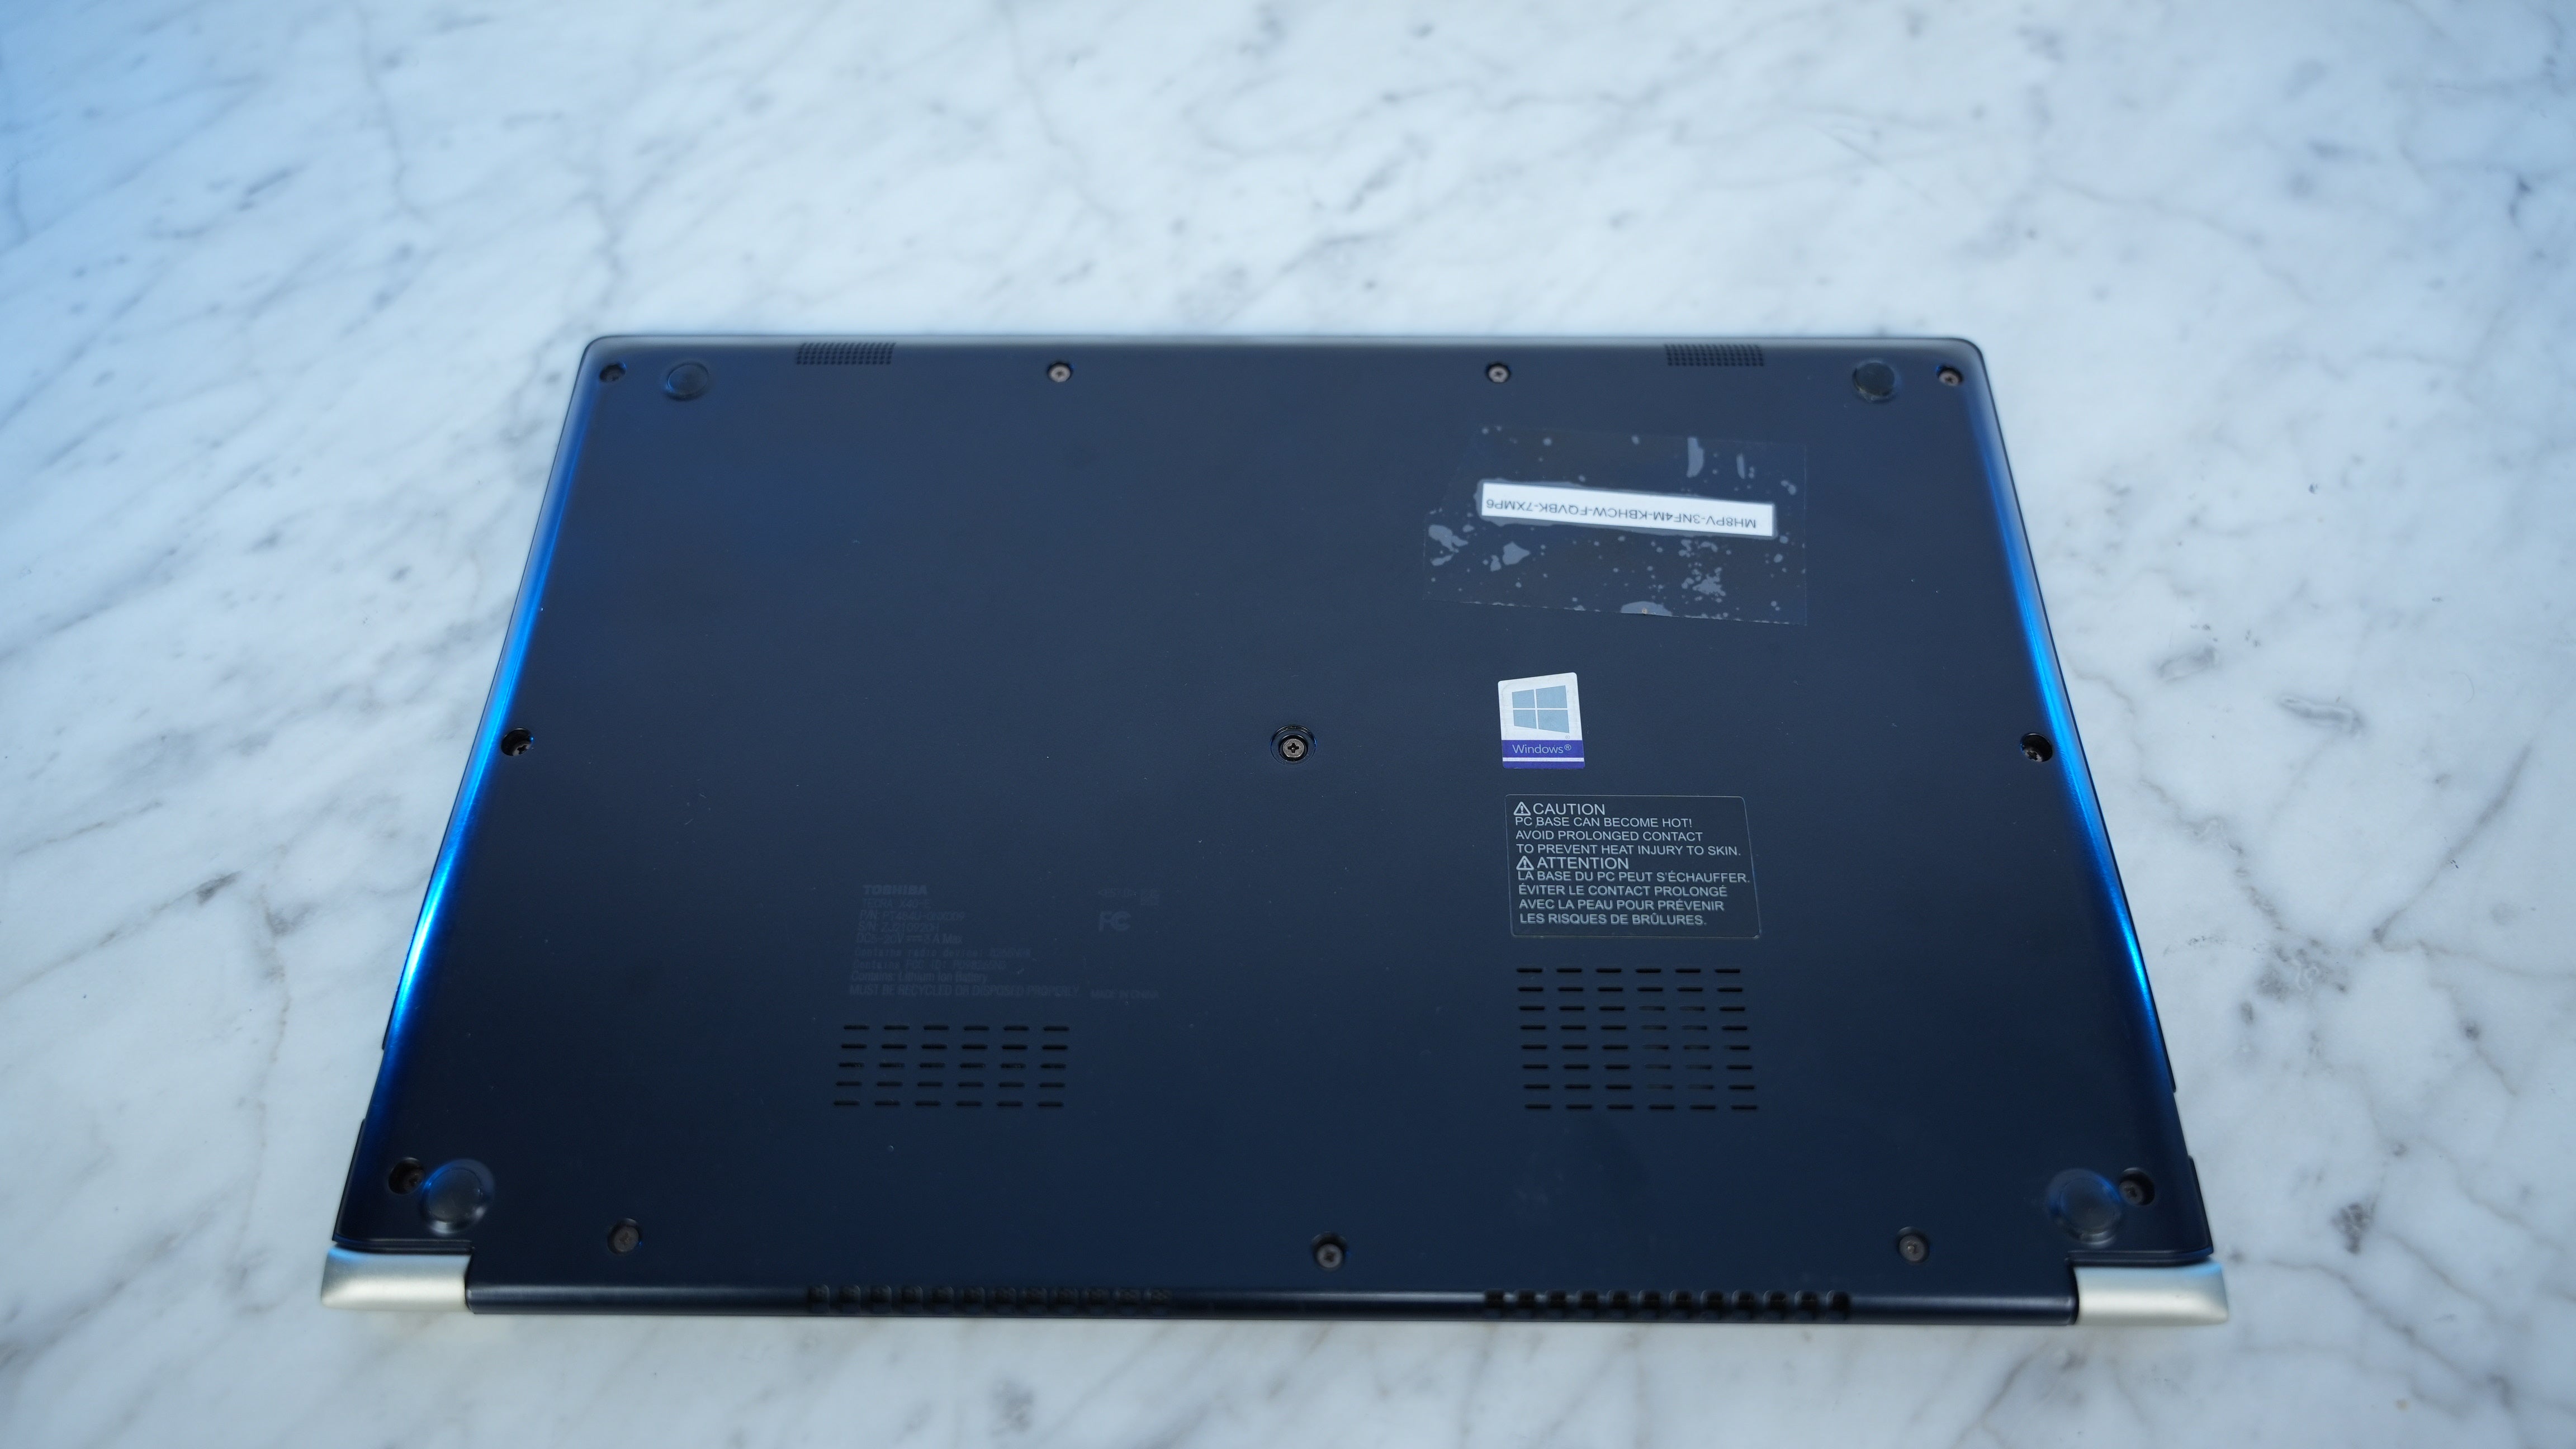 Toshiba Office Laptop - Intel i7 8650U + UHD 620 (In Stock)